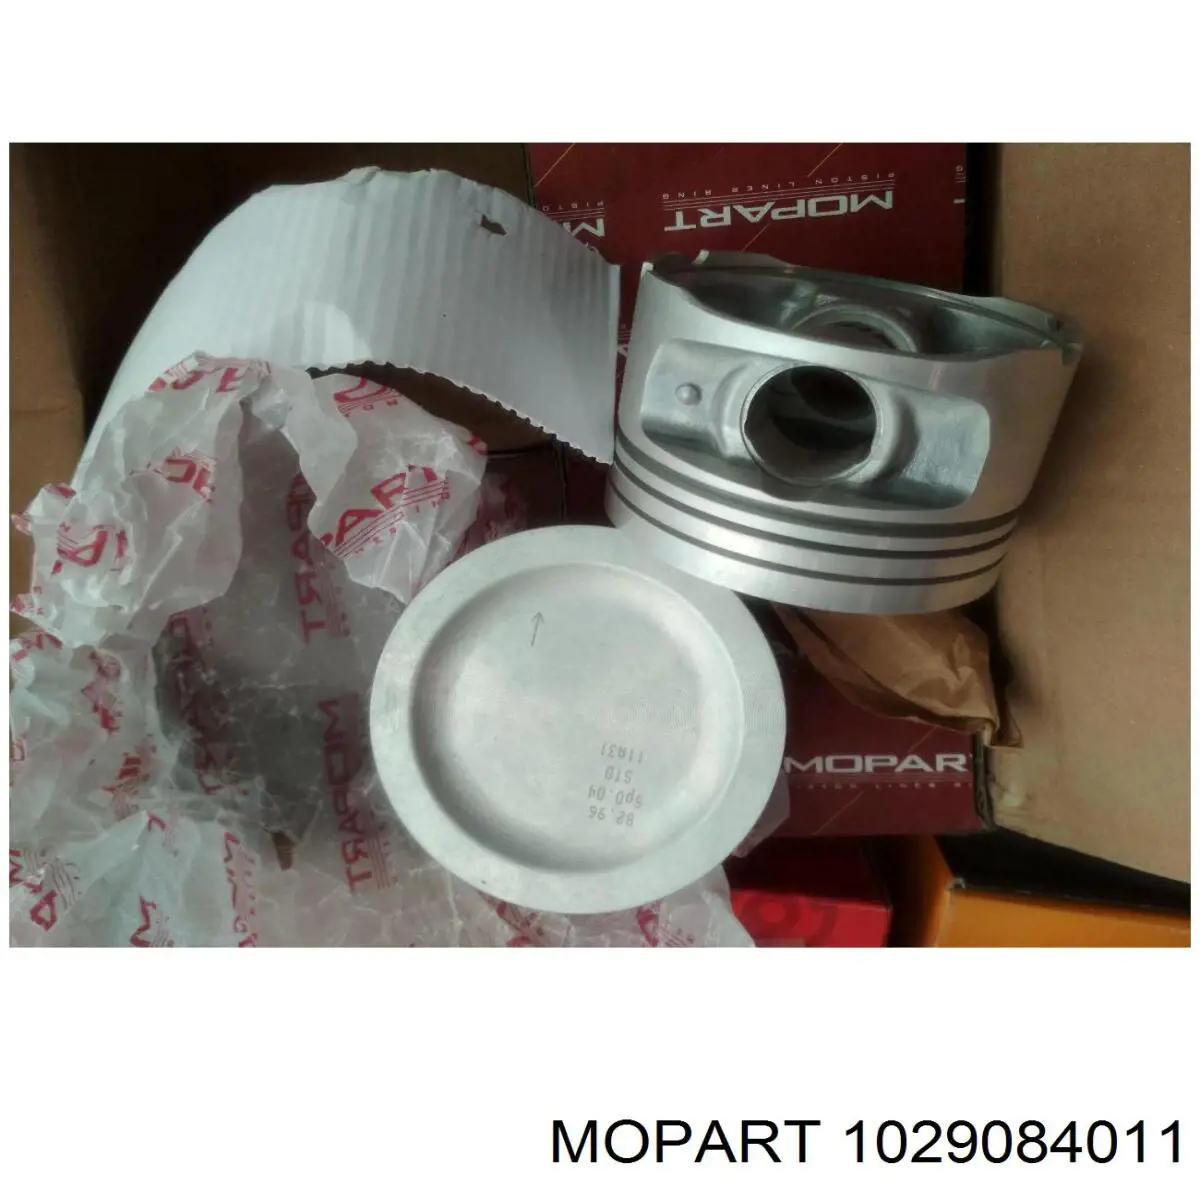 102-90840.11 Mopart pistón completo para 1 cilindro, cota de reparación + 0,50 mm